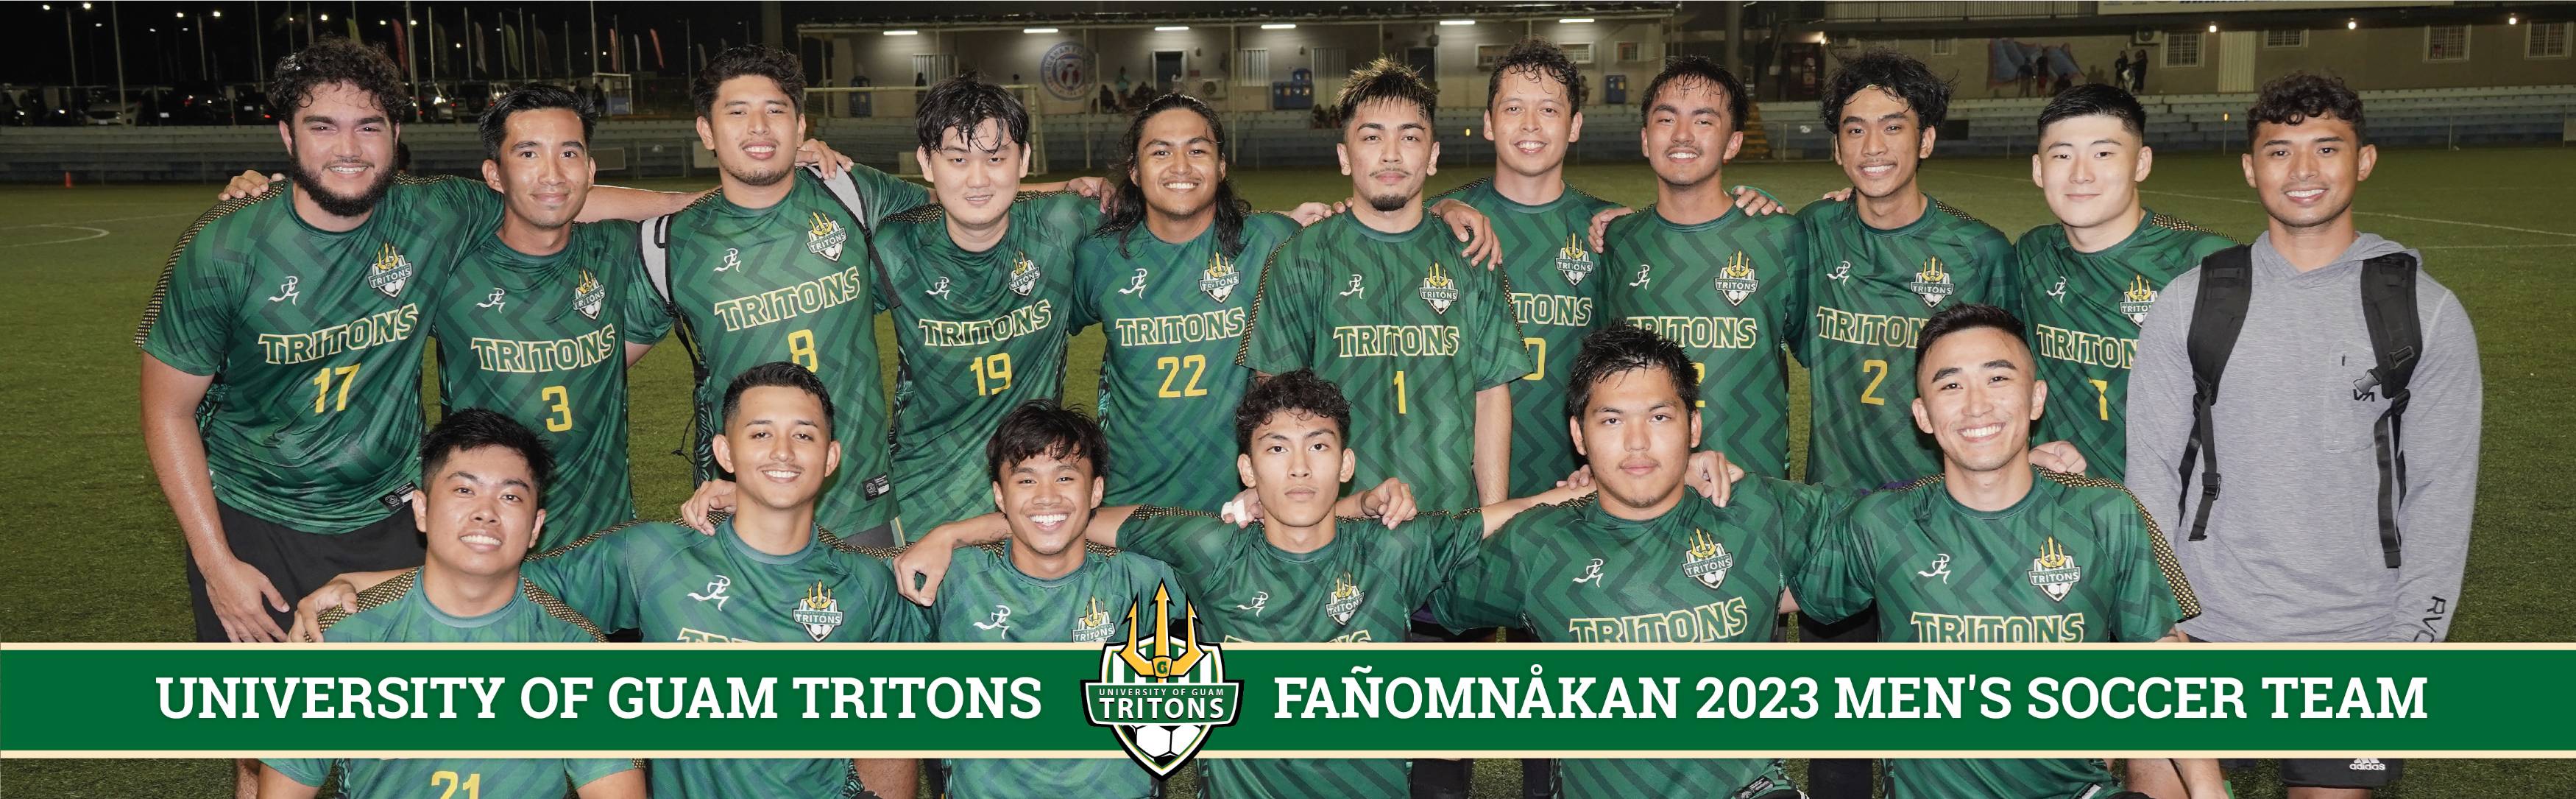 Triton Men's Soccer Team Fanomnakan 2023